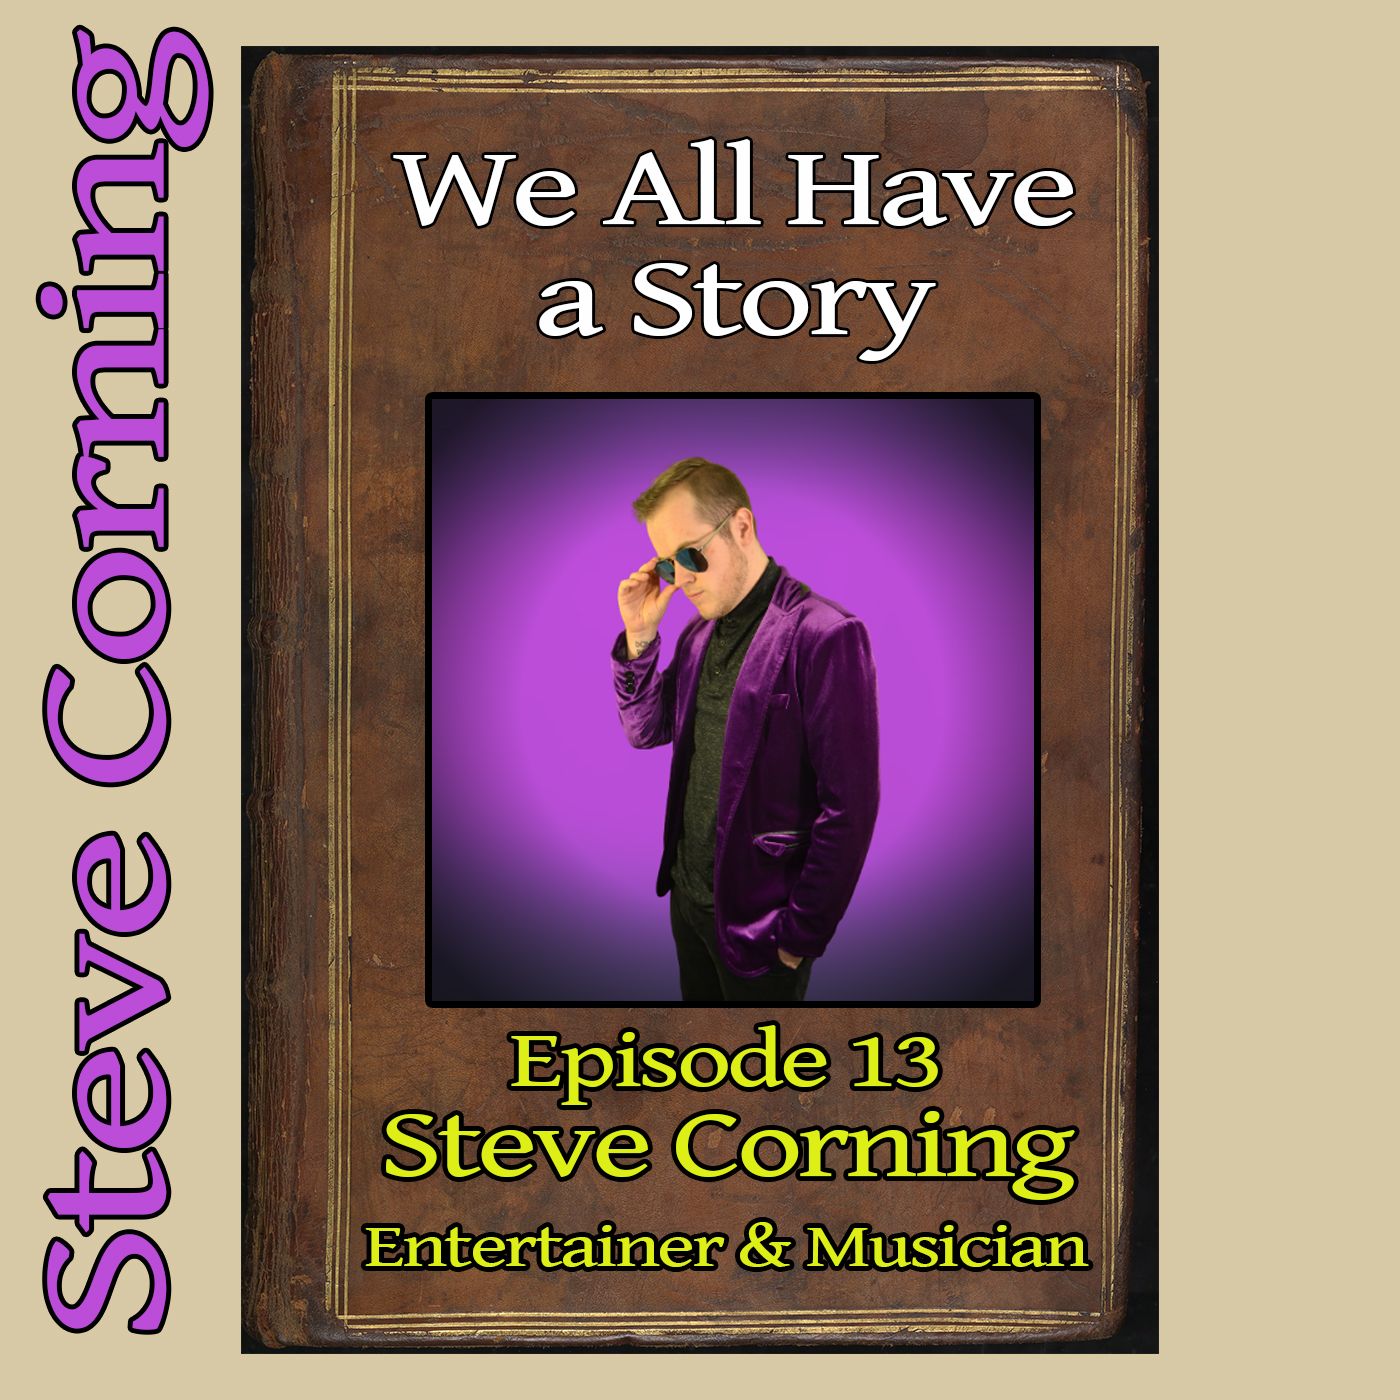 Episode 13 - Steve Corning, Entertainer and Musician